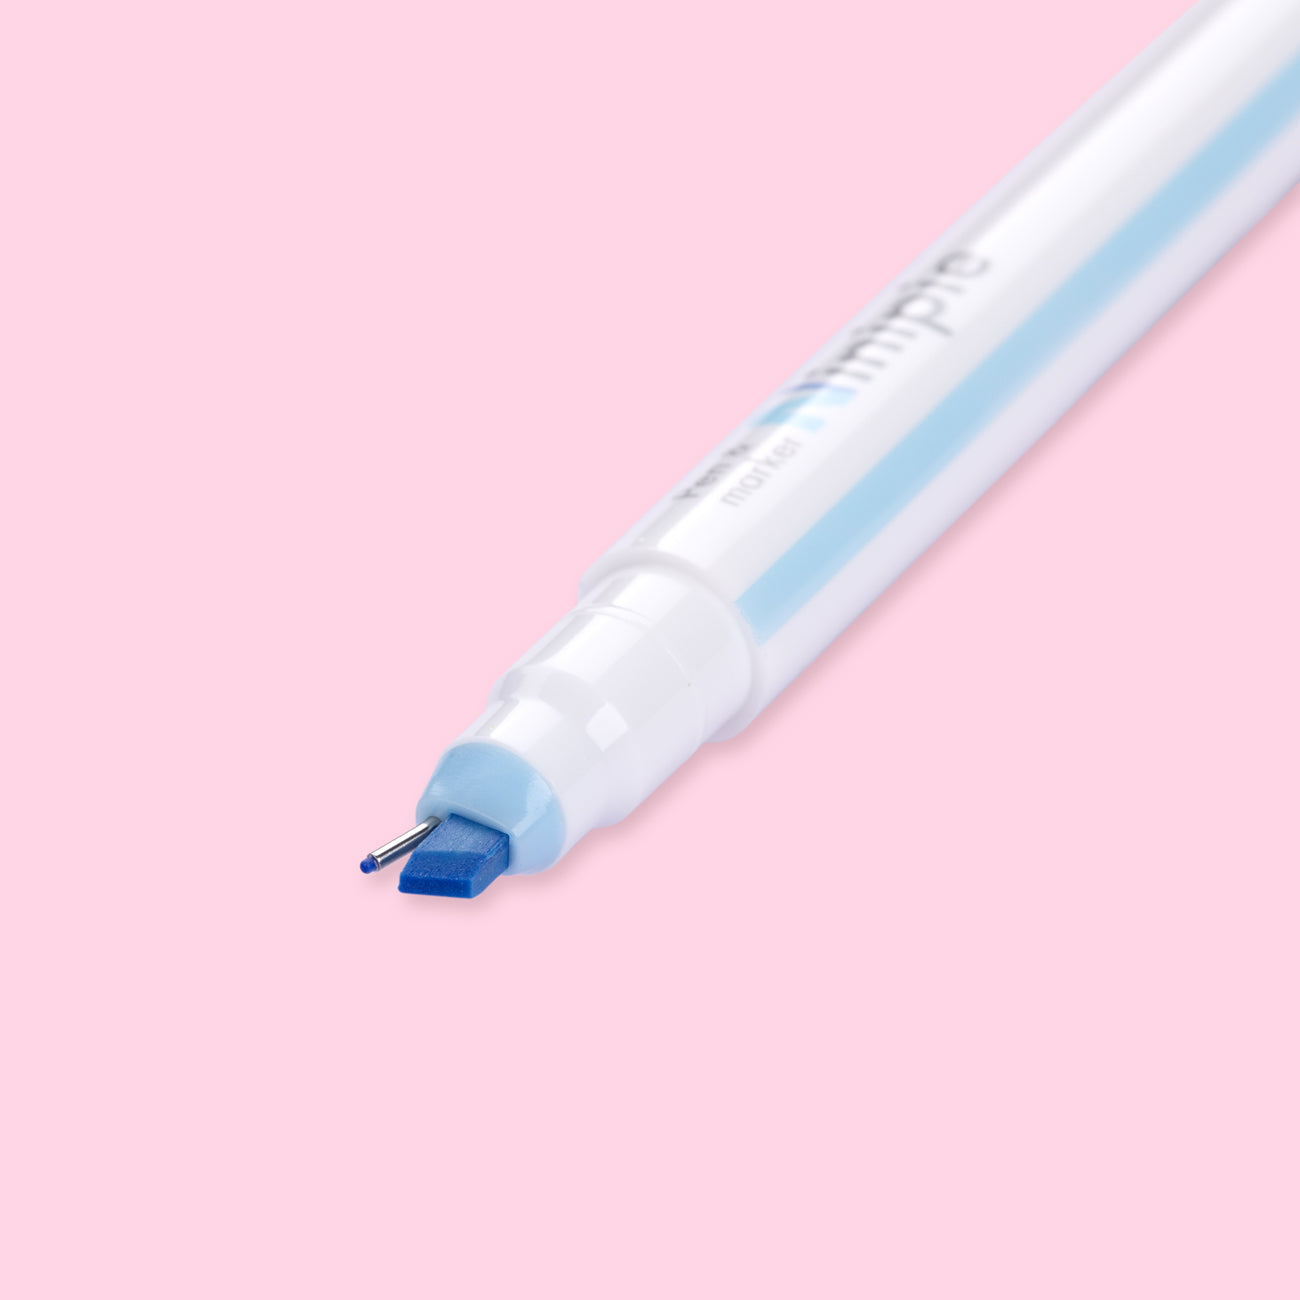 Sun-Star Ninipie Pen & Marker - Light Blue + Blue